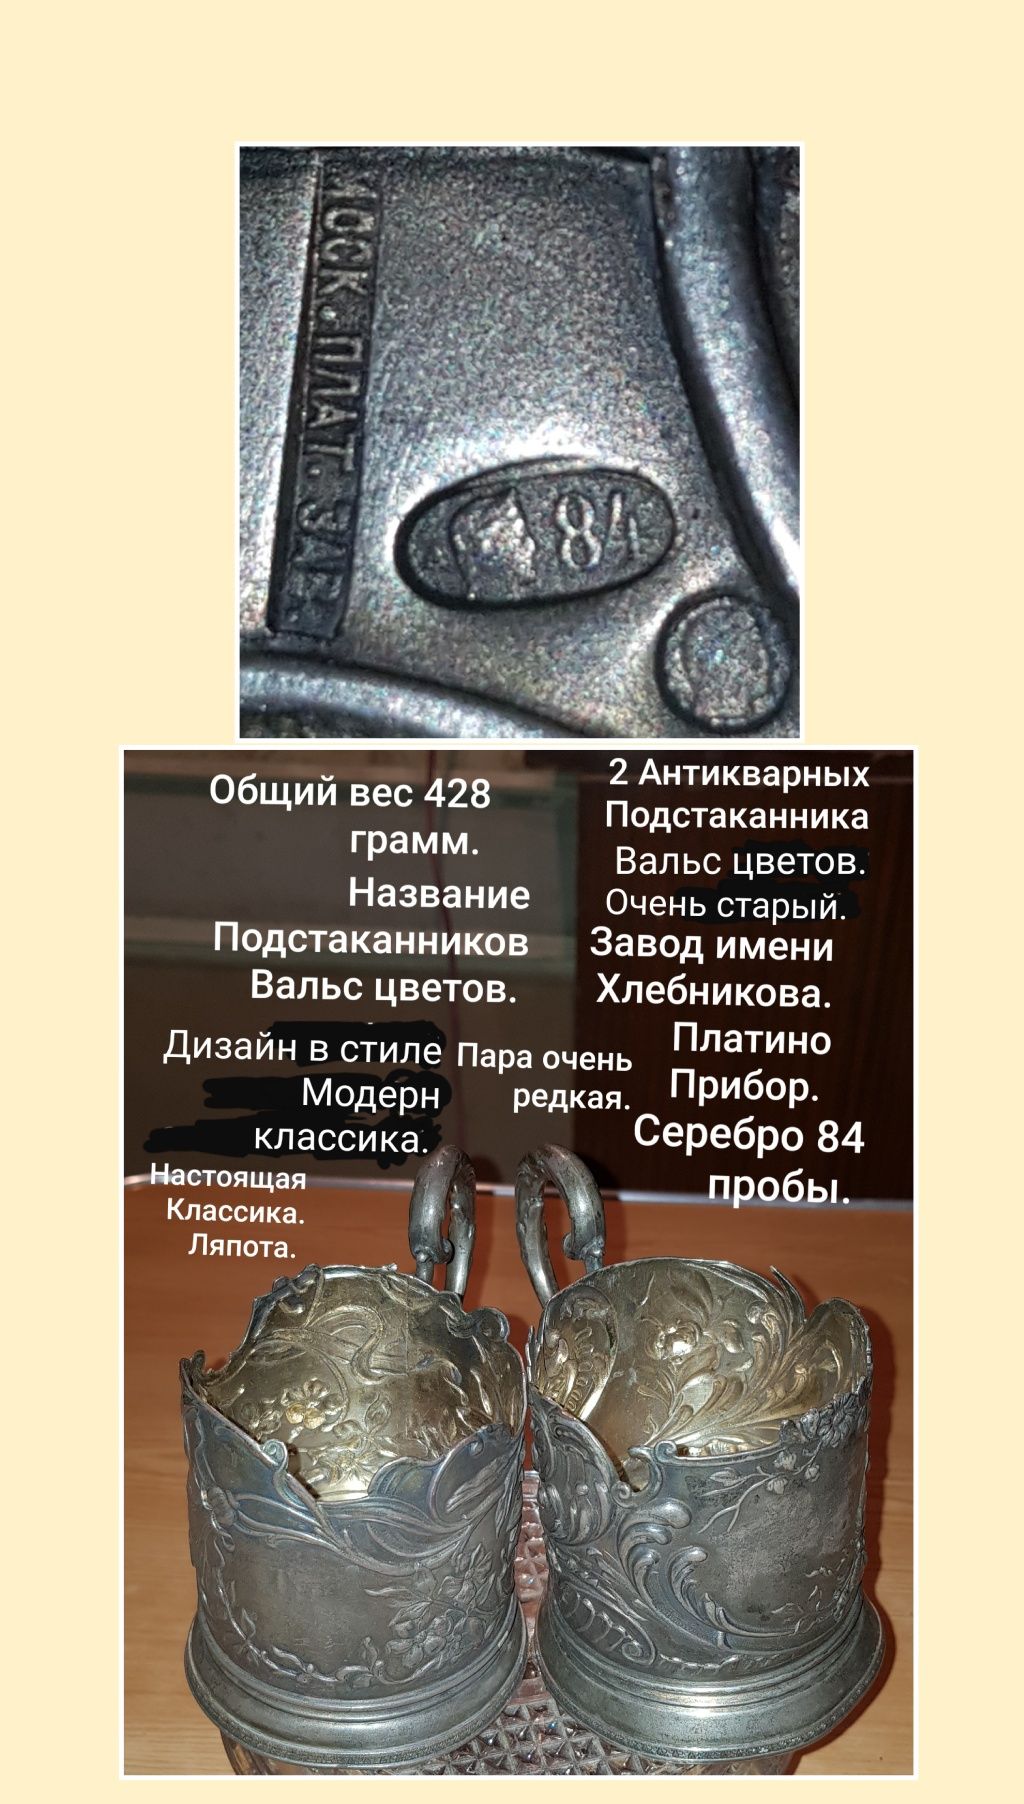 Антик Подстаканники серебро 84 пробы вес 428 грамм зав Платиноприбор